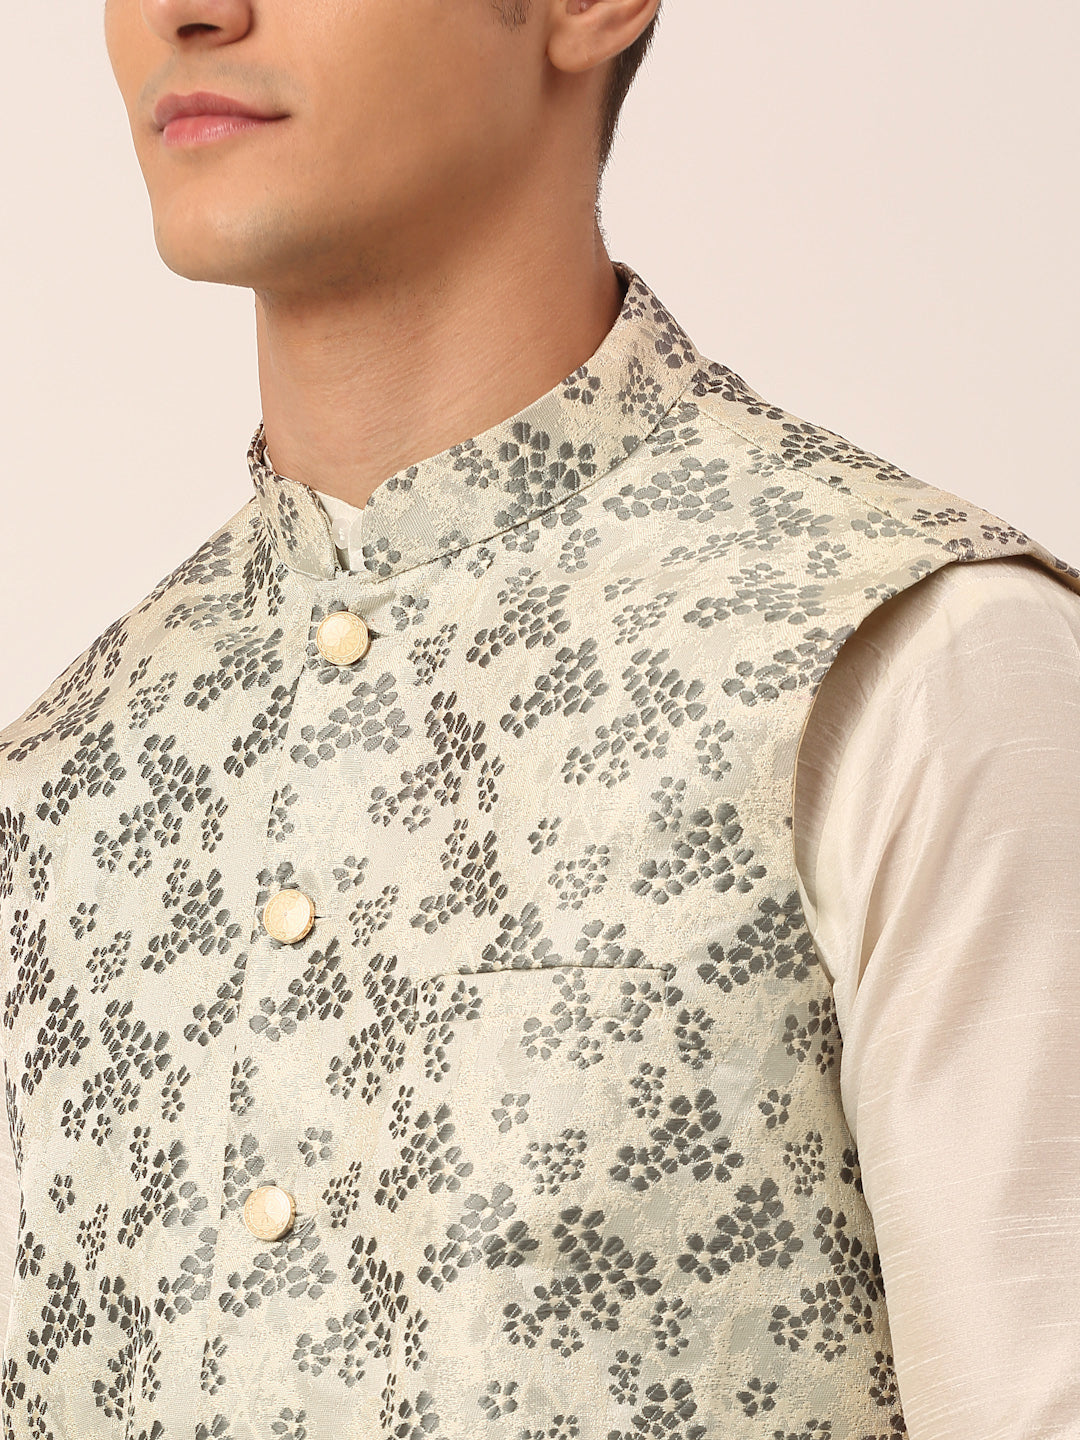 Men's Solid Kurta Pyjama With Grey Floral Embroidered Nehru Jacket